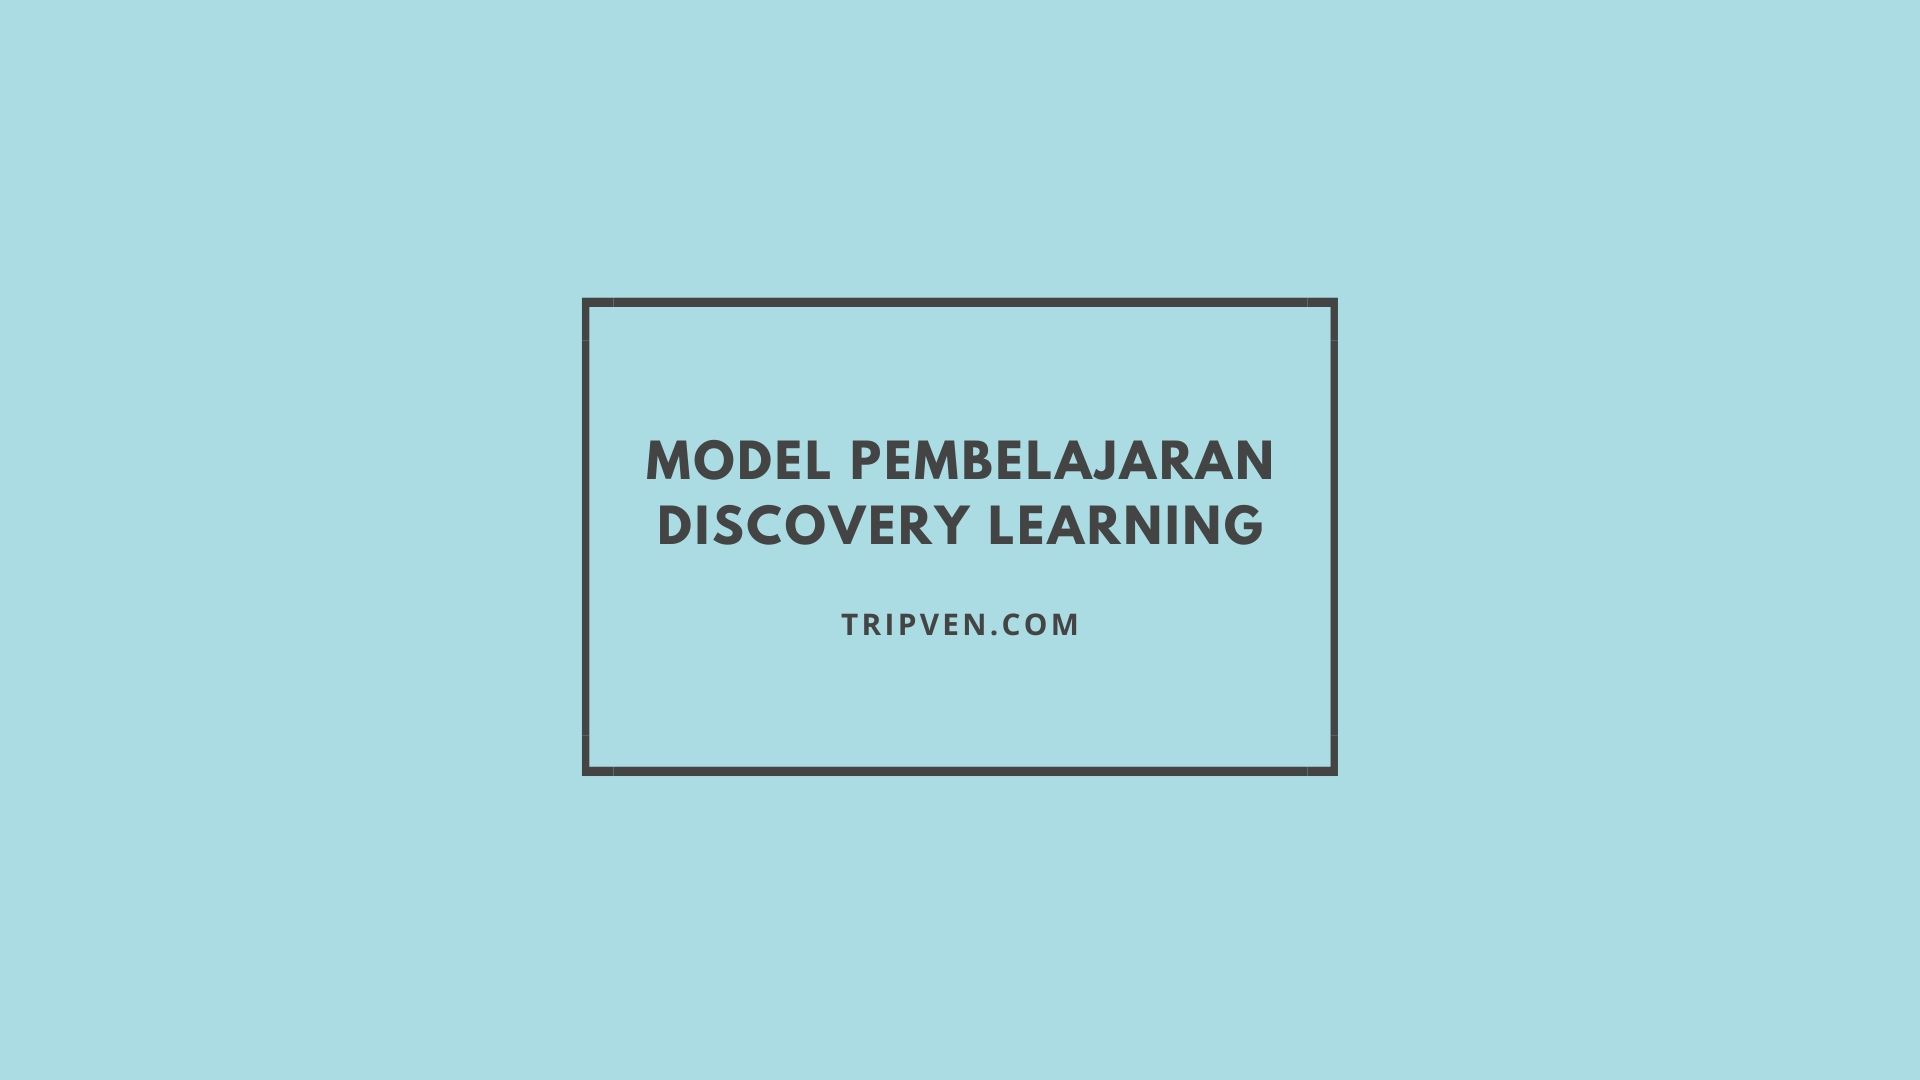 Discovery learning adalah